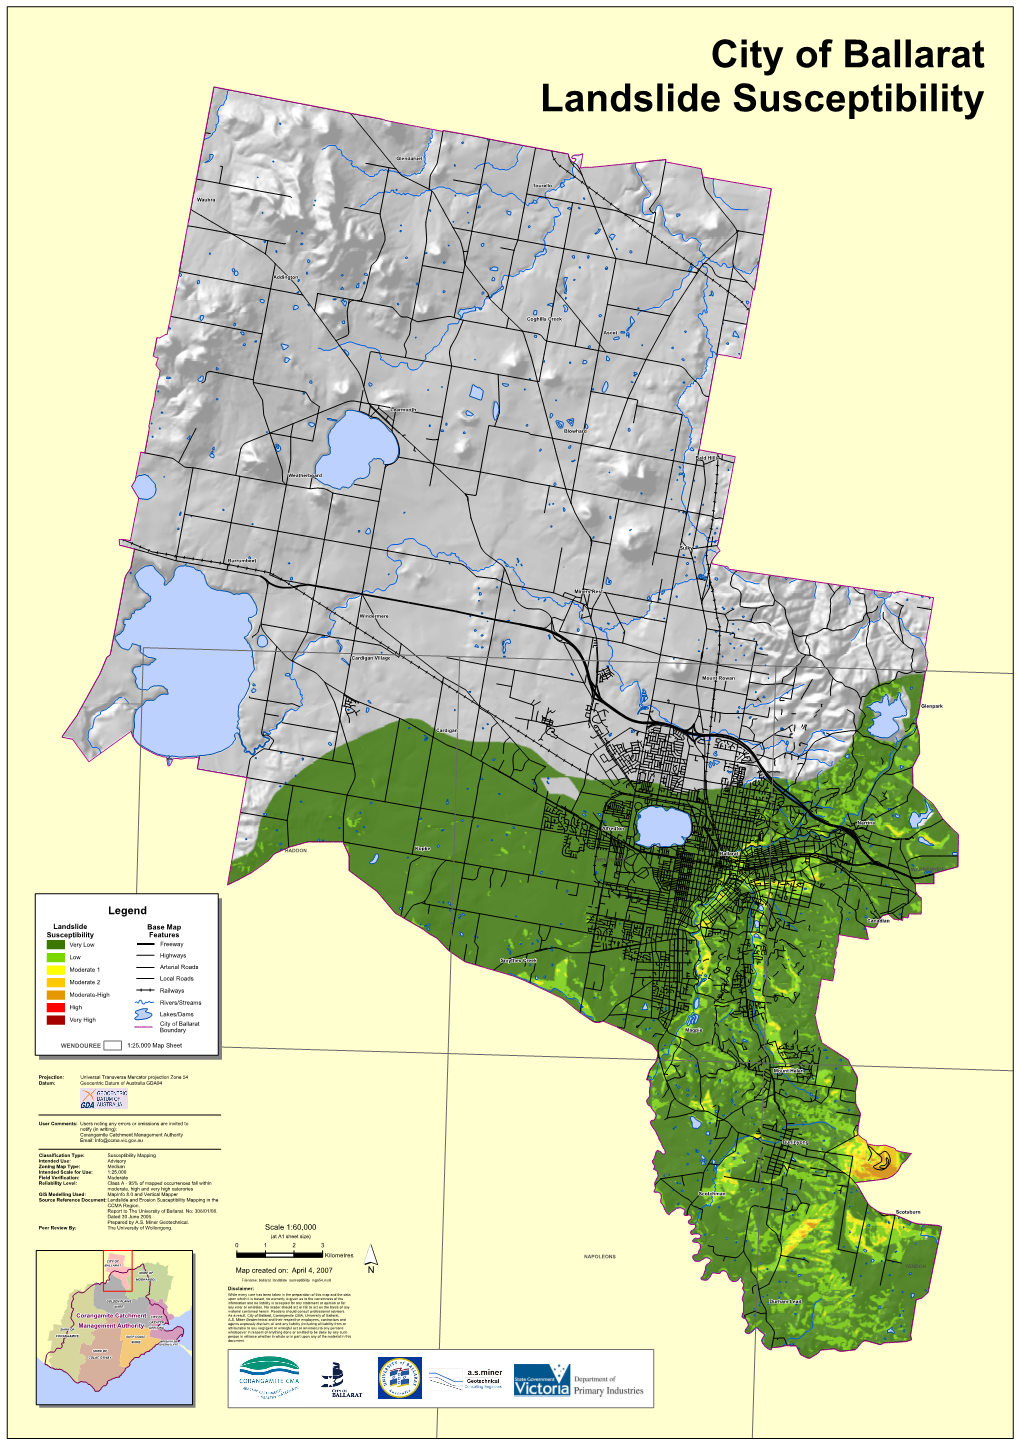 City of Ballarat Landslide Susceptibility